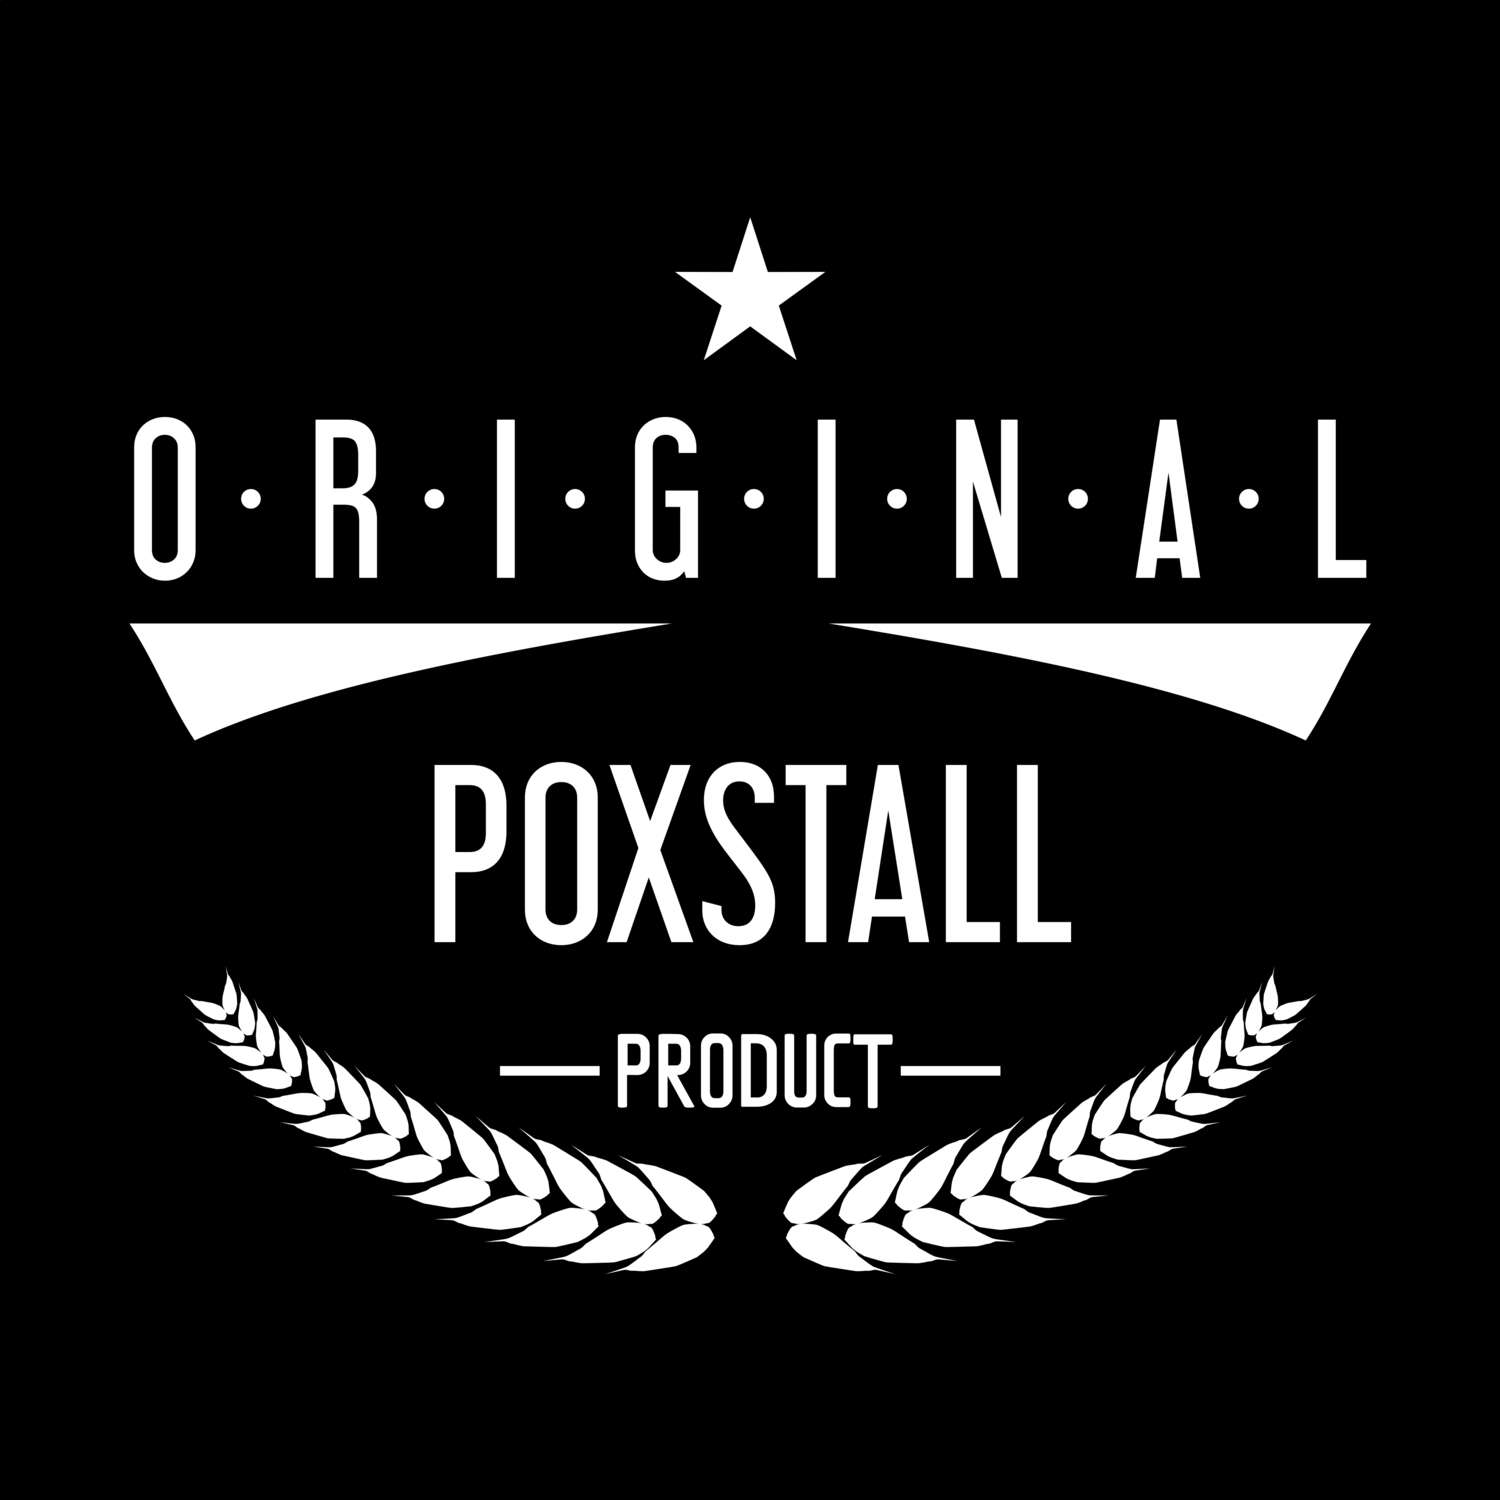 Poxstall T-Shirt »Original Product«